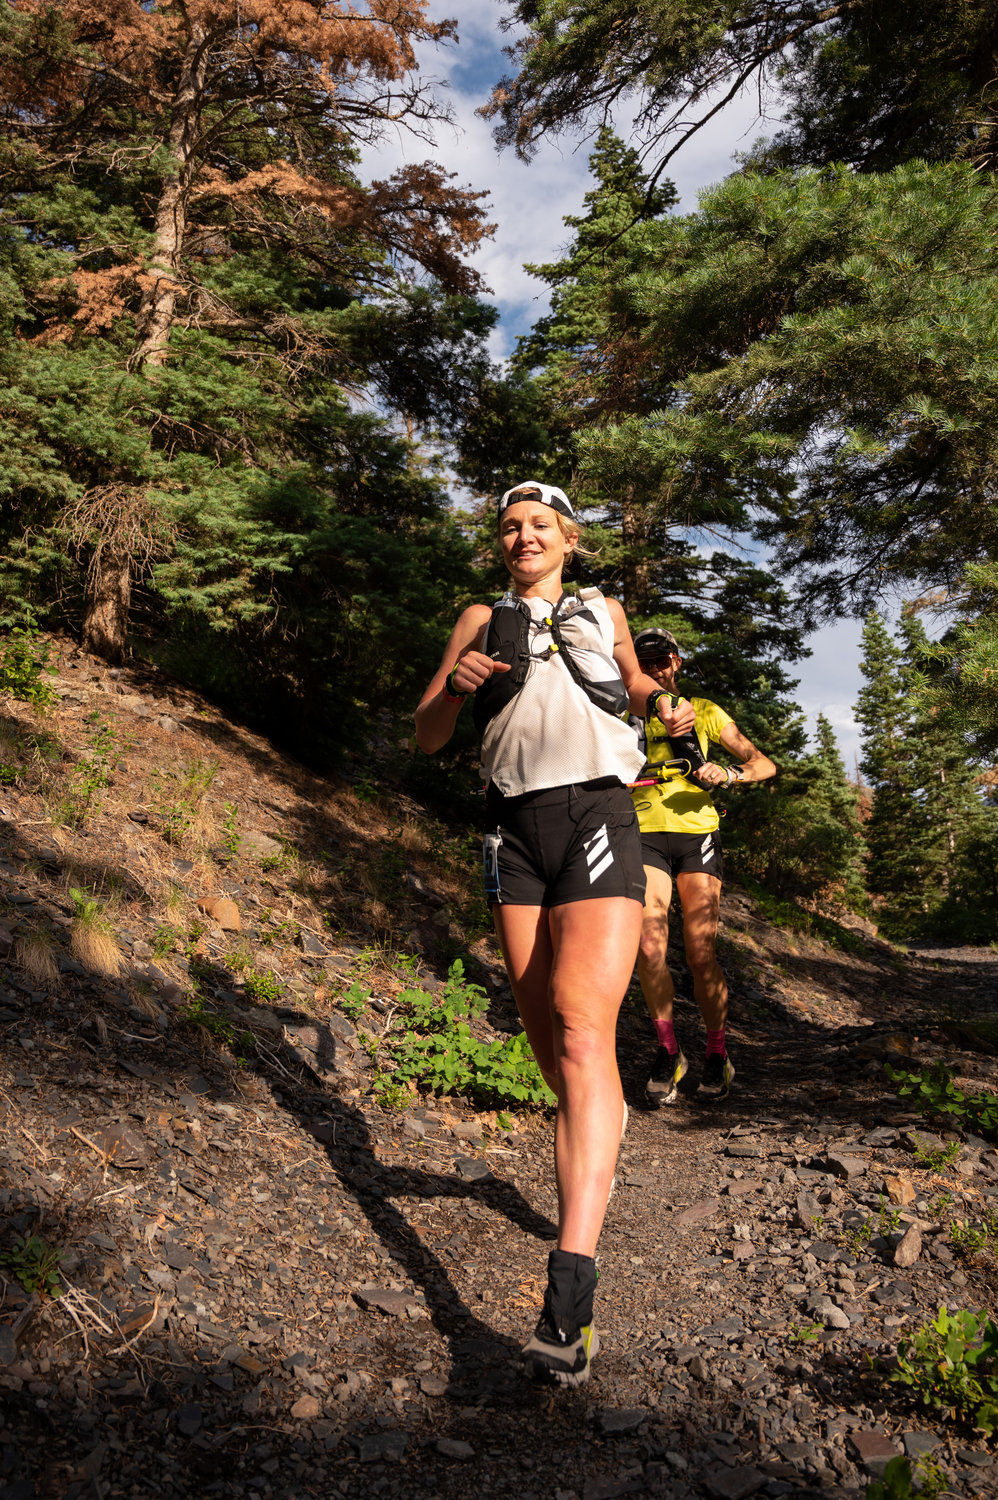 Sabrina Stanley makes a descent during the Hardrock 100 ultramarathon in Silverton, Colorado, held July 16-17.